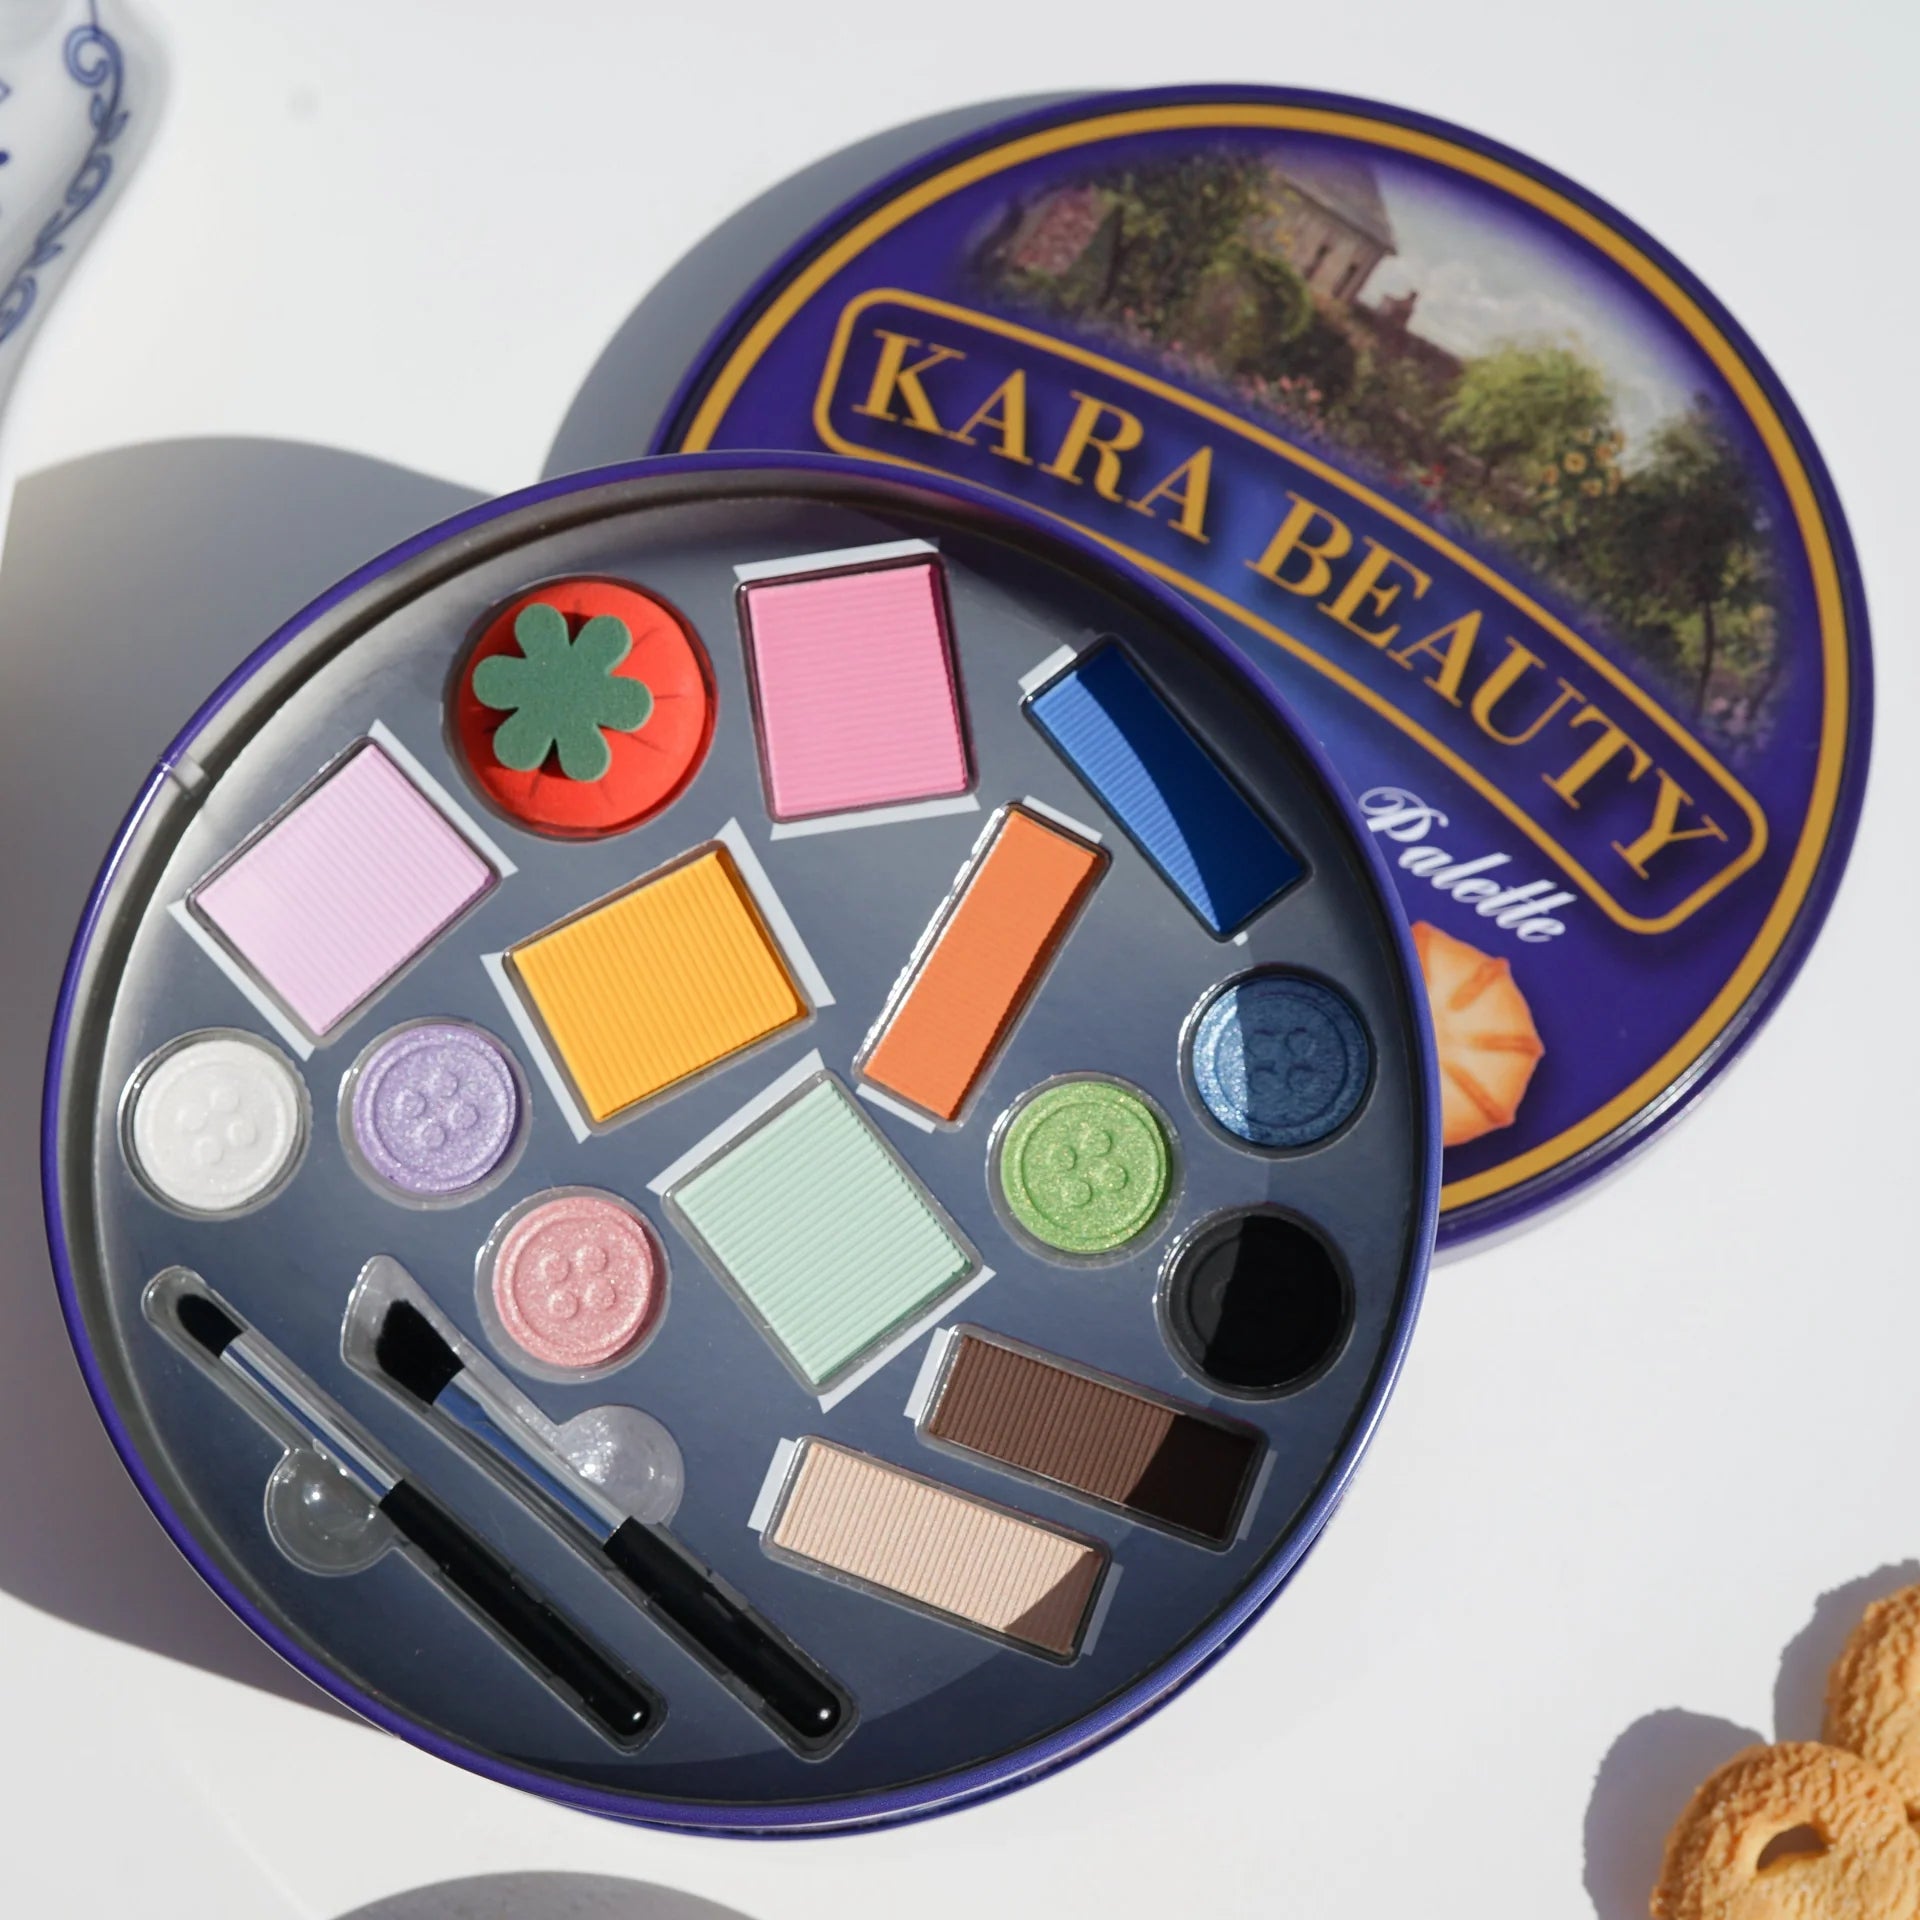 Kara Beauty - Cookie Tin Creative Beauty Palette